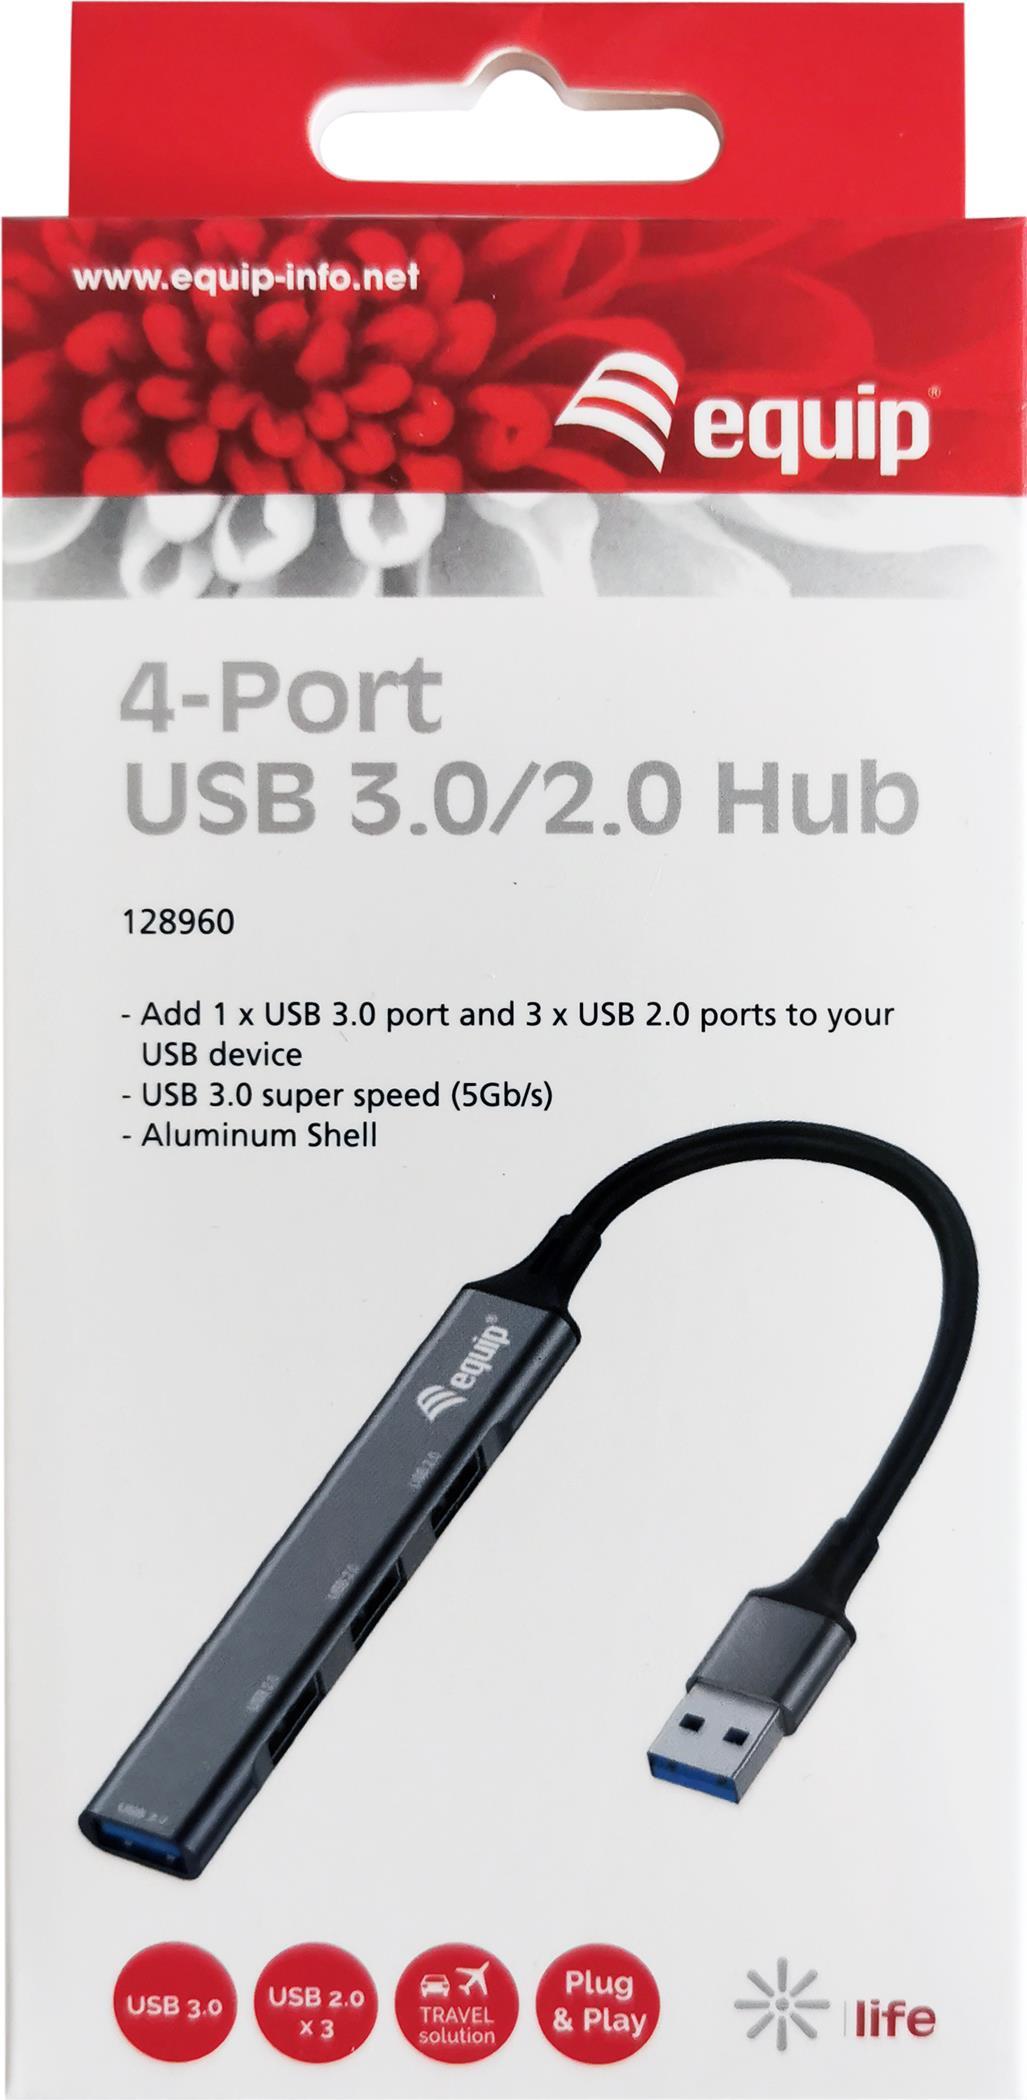 Equip 4-PORT-USB 3.0/2.0-HUB (128960)